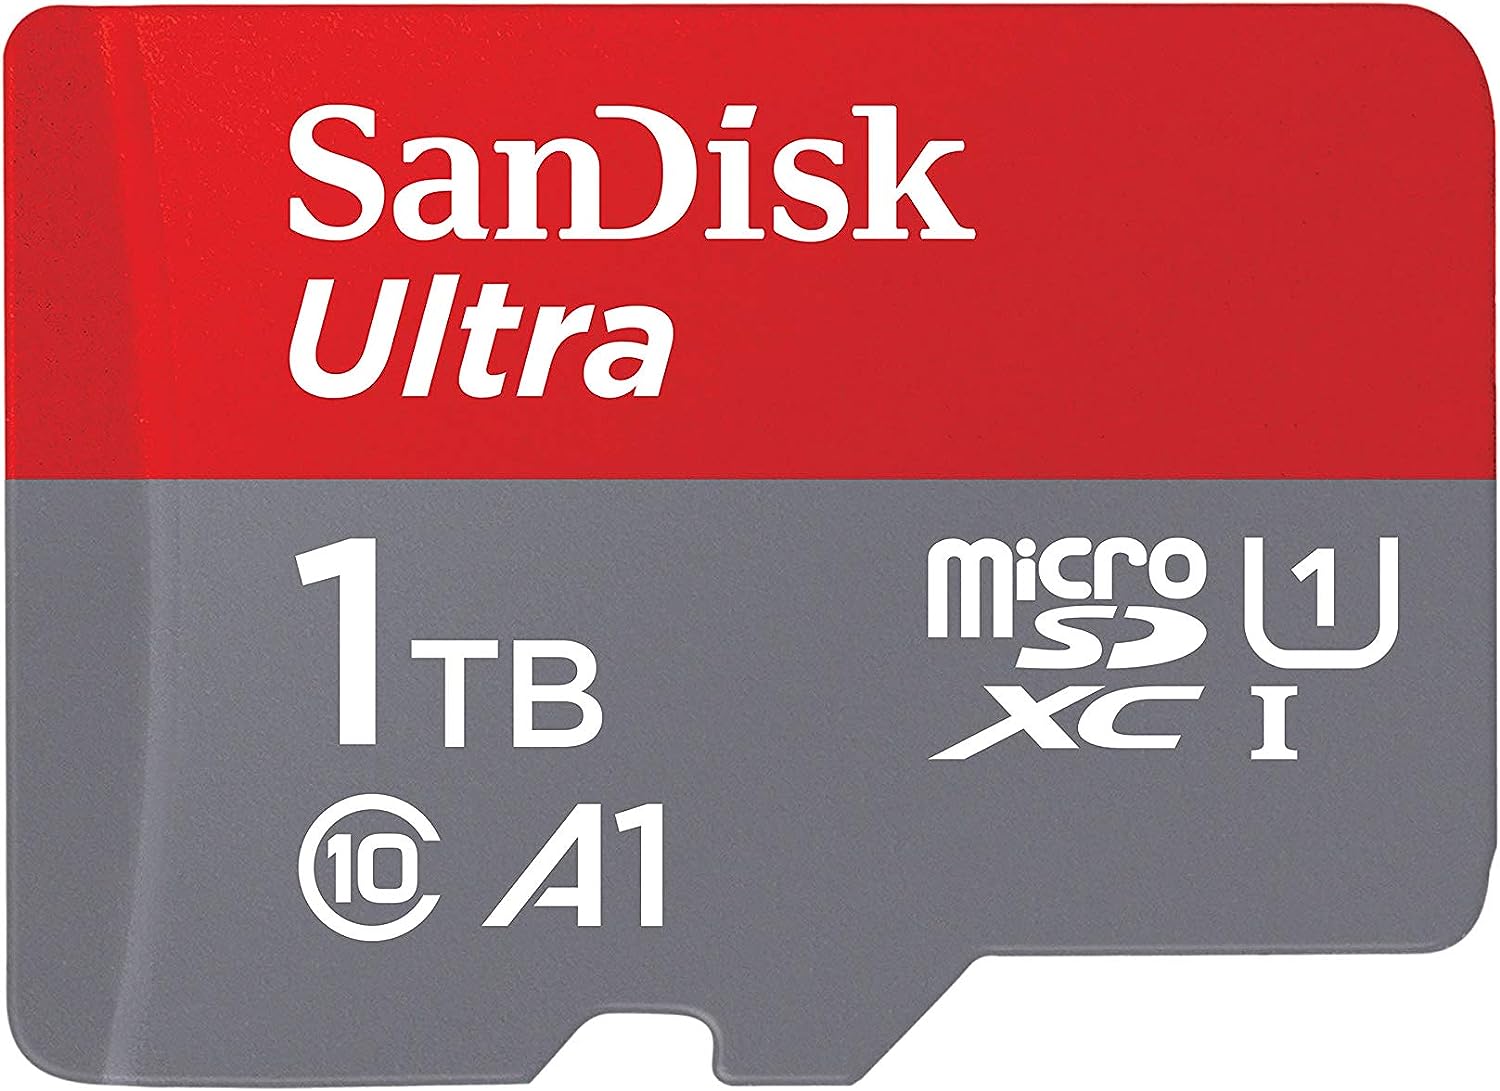 Sandisk 1TB Ultra microSDHC UHS-I Memory Card (SDSQUAC-1T00-GN6MN)